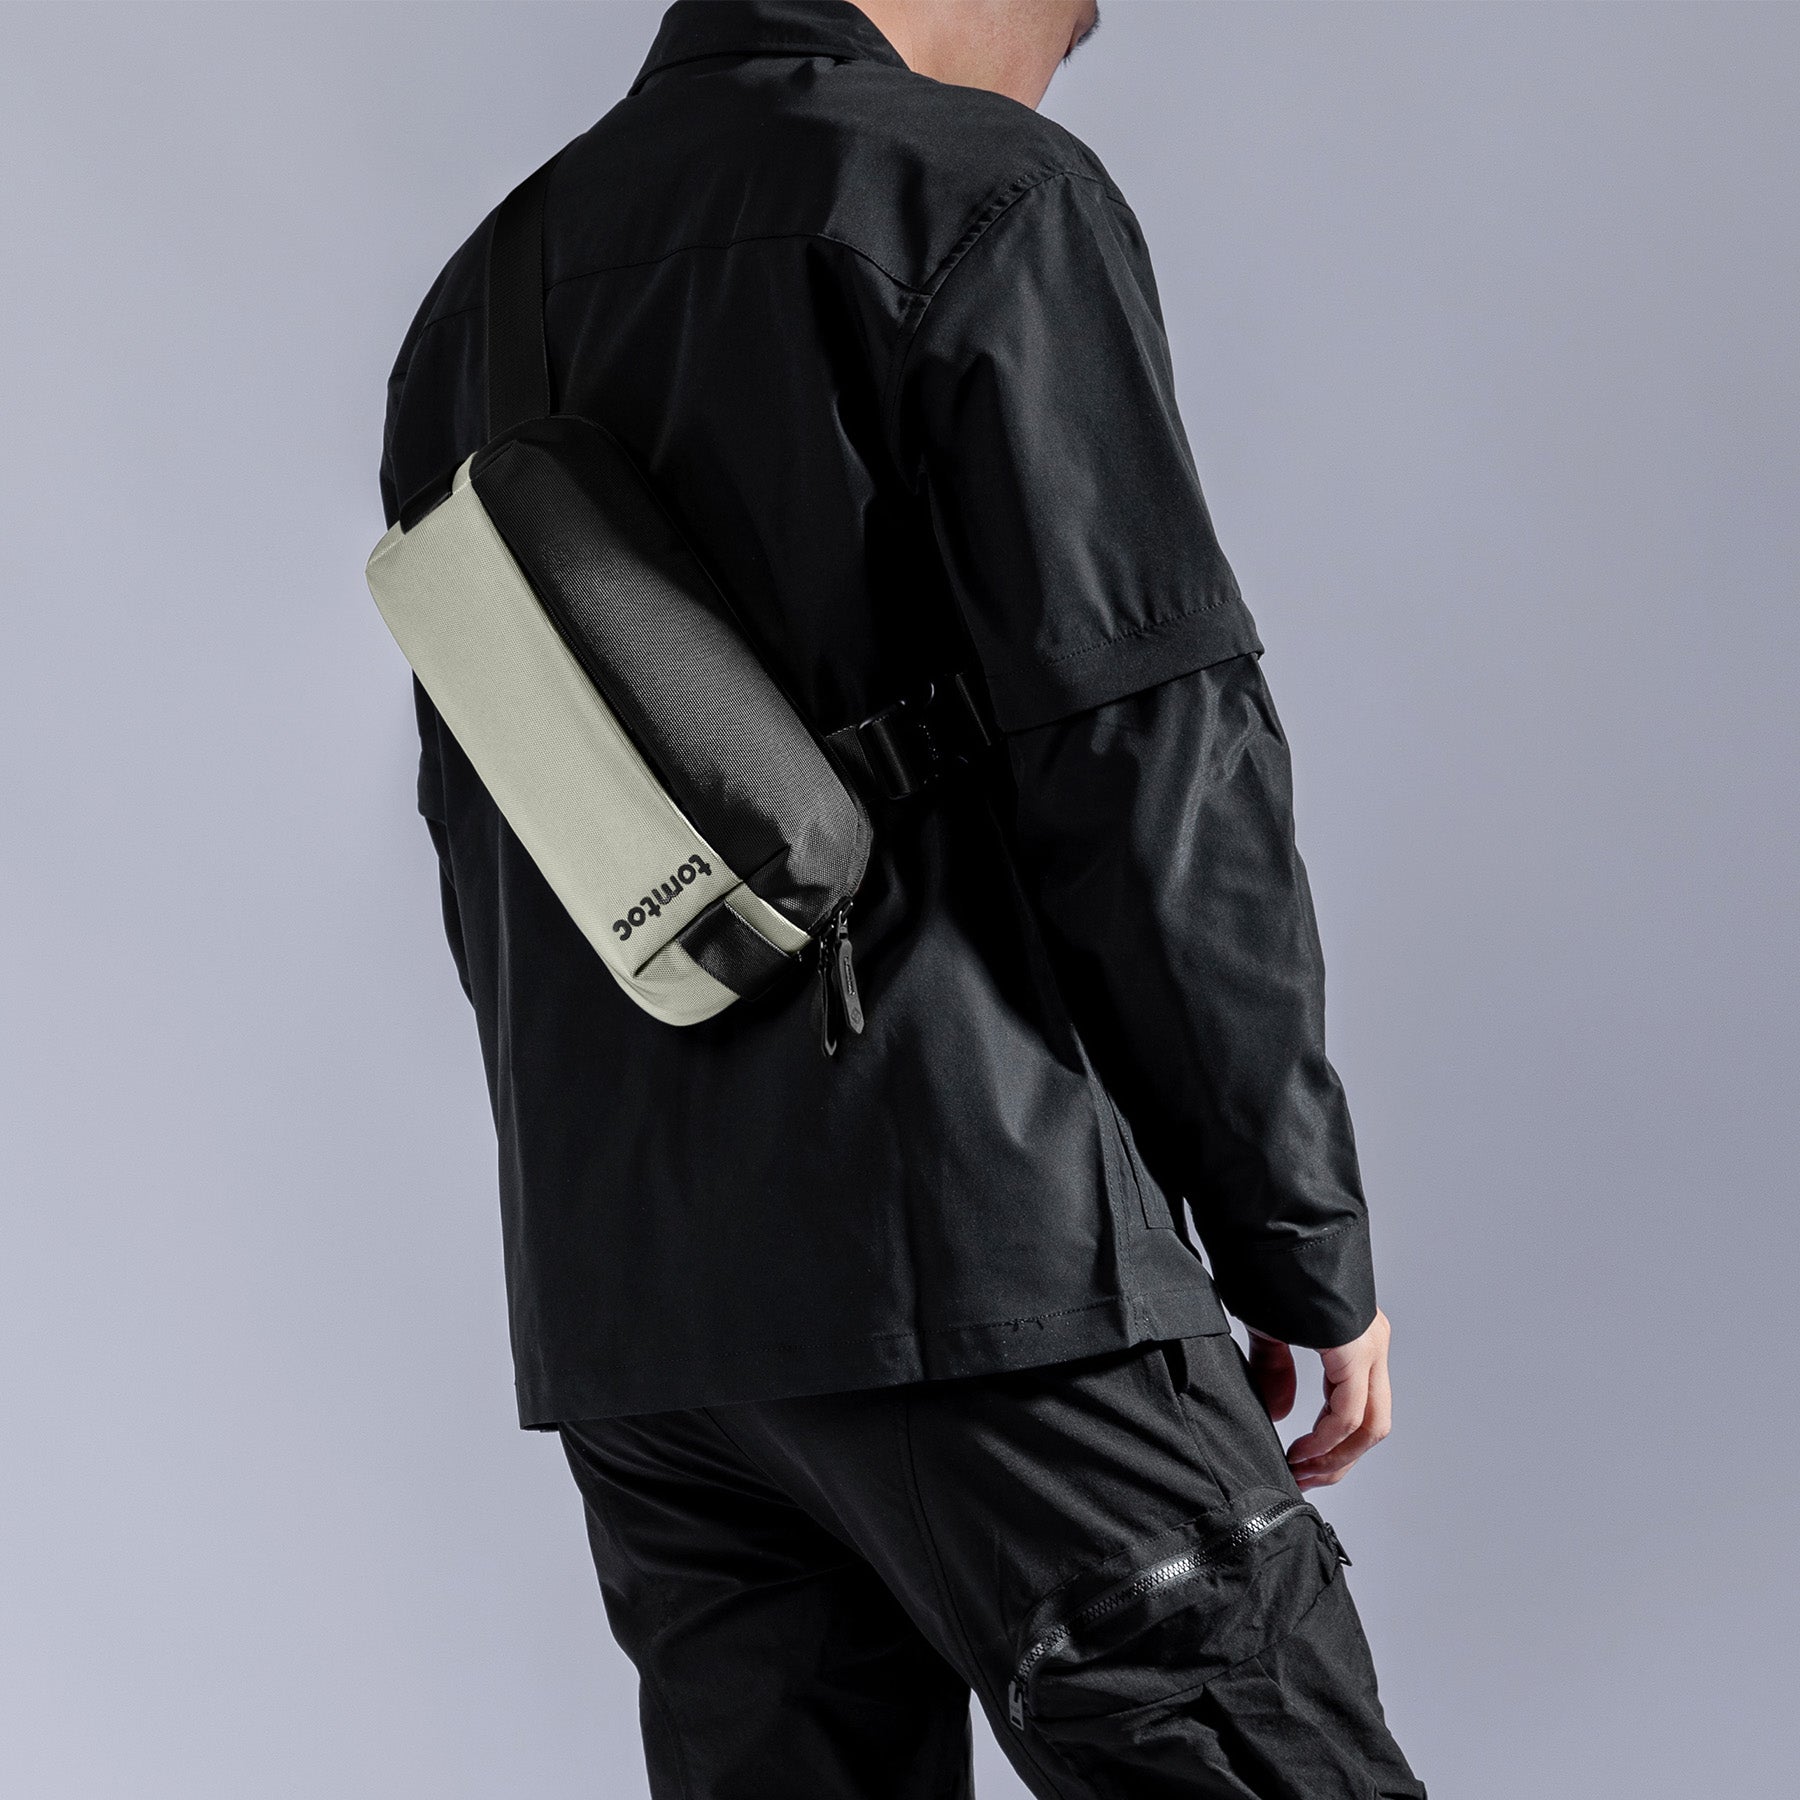 tomtoc Minimalist EDC Sling Men Bag / Crossbody Bag / Shoulder Bag / Chest Bag - Light Gray